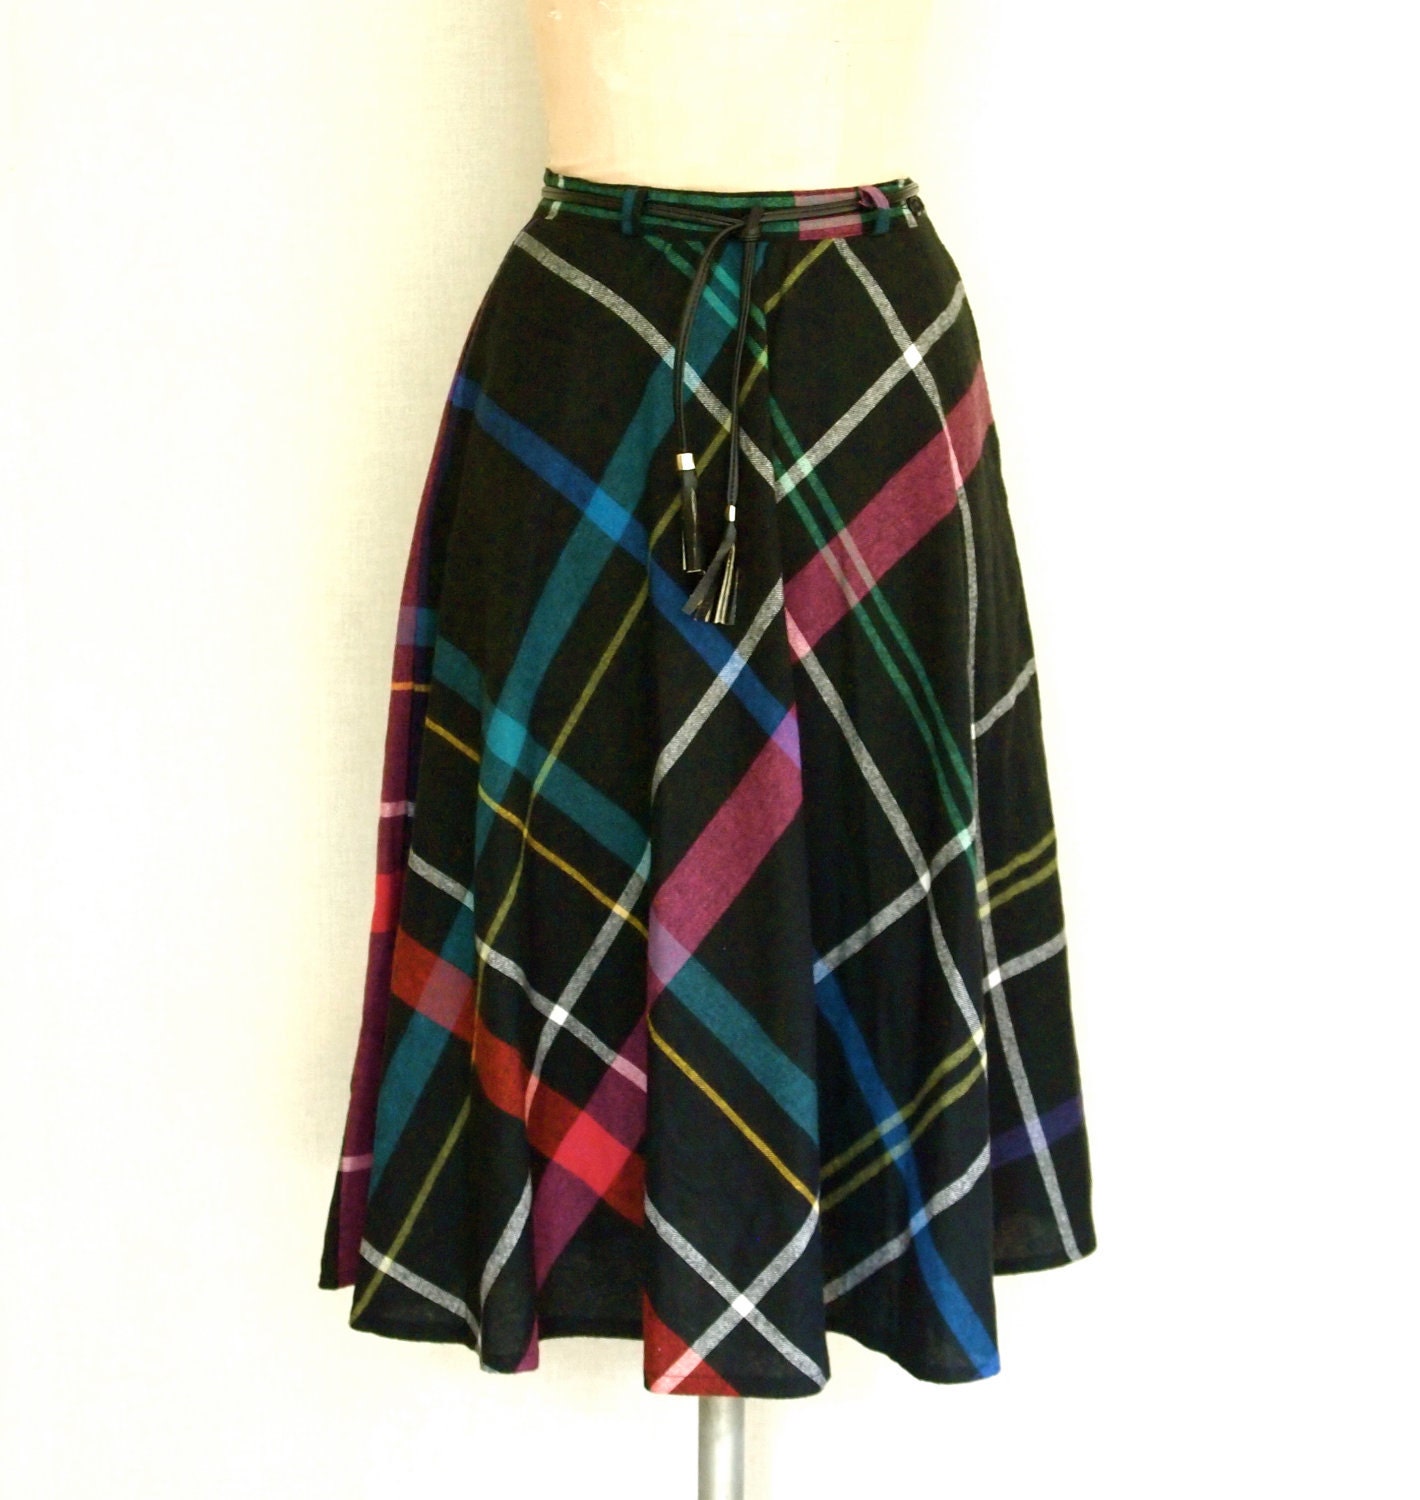 Vintage 1970s Plaid Tartan skirt // 70s high waist pocket skirt